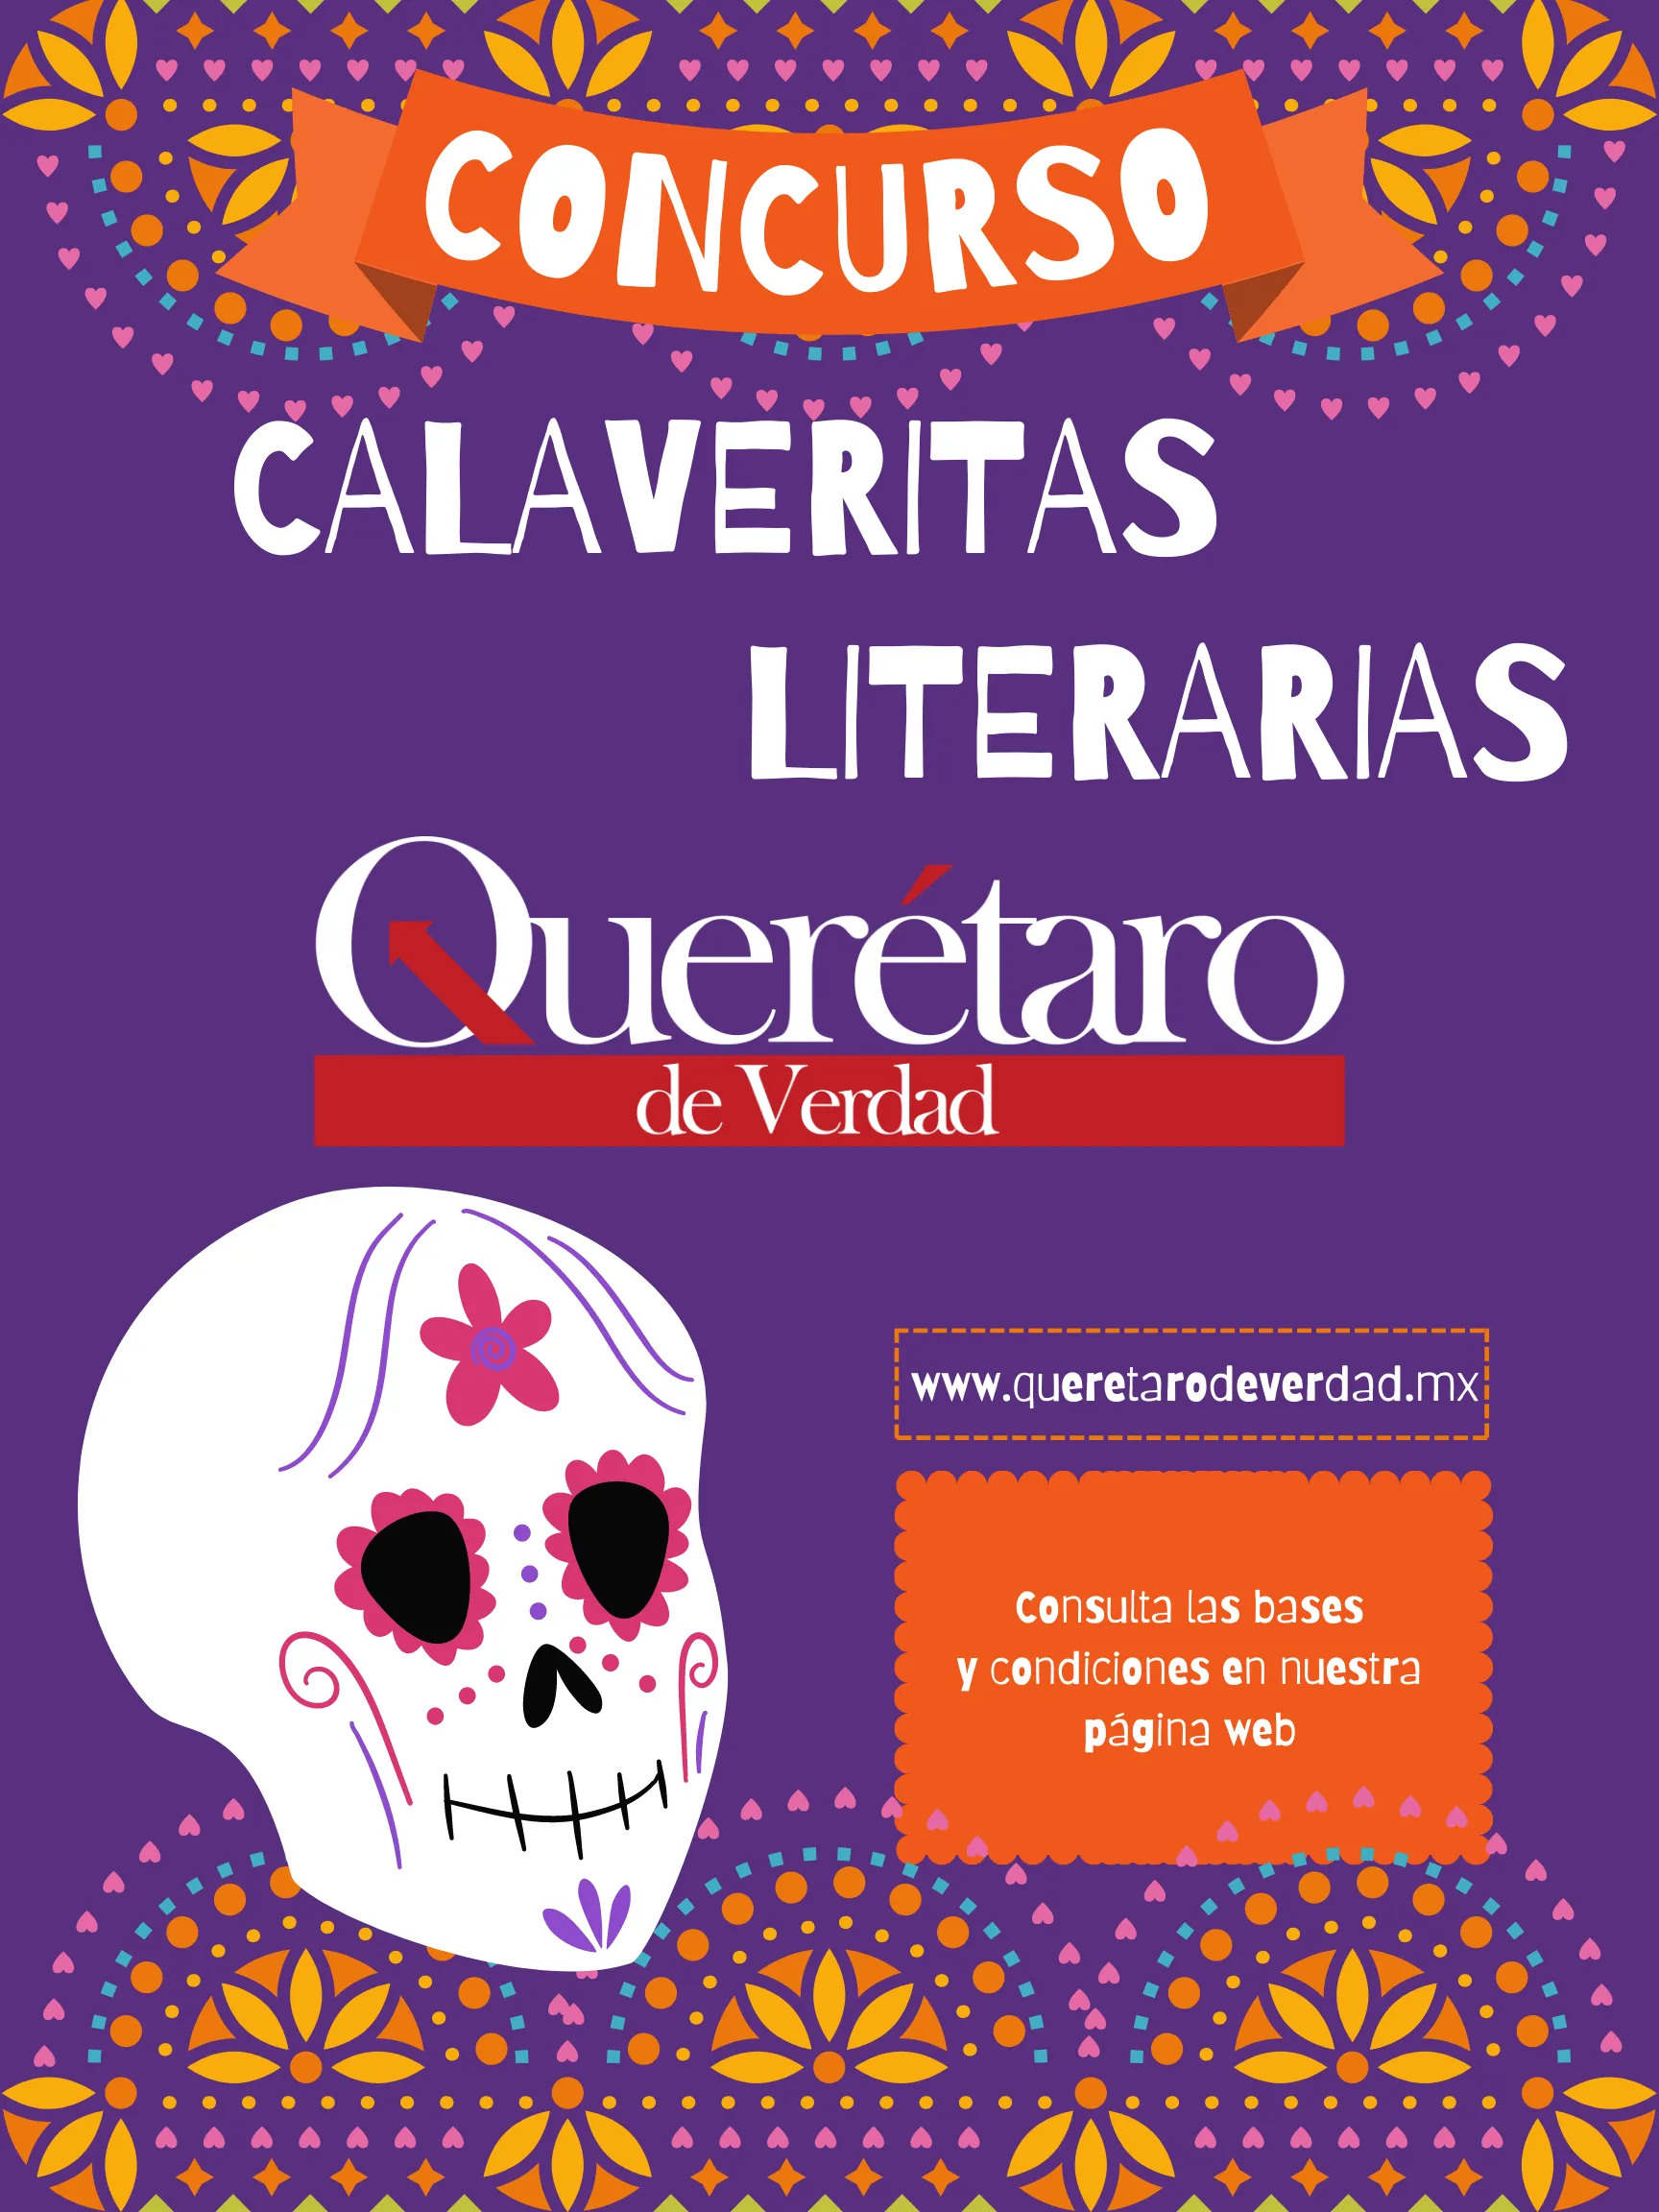 Convocatoria Concurso de Calaveritas Literarias – Querétaro de Verdad